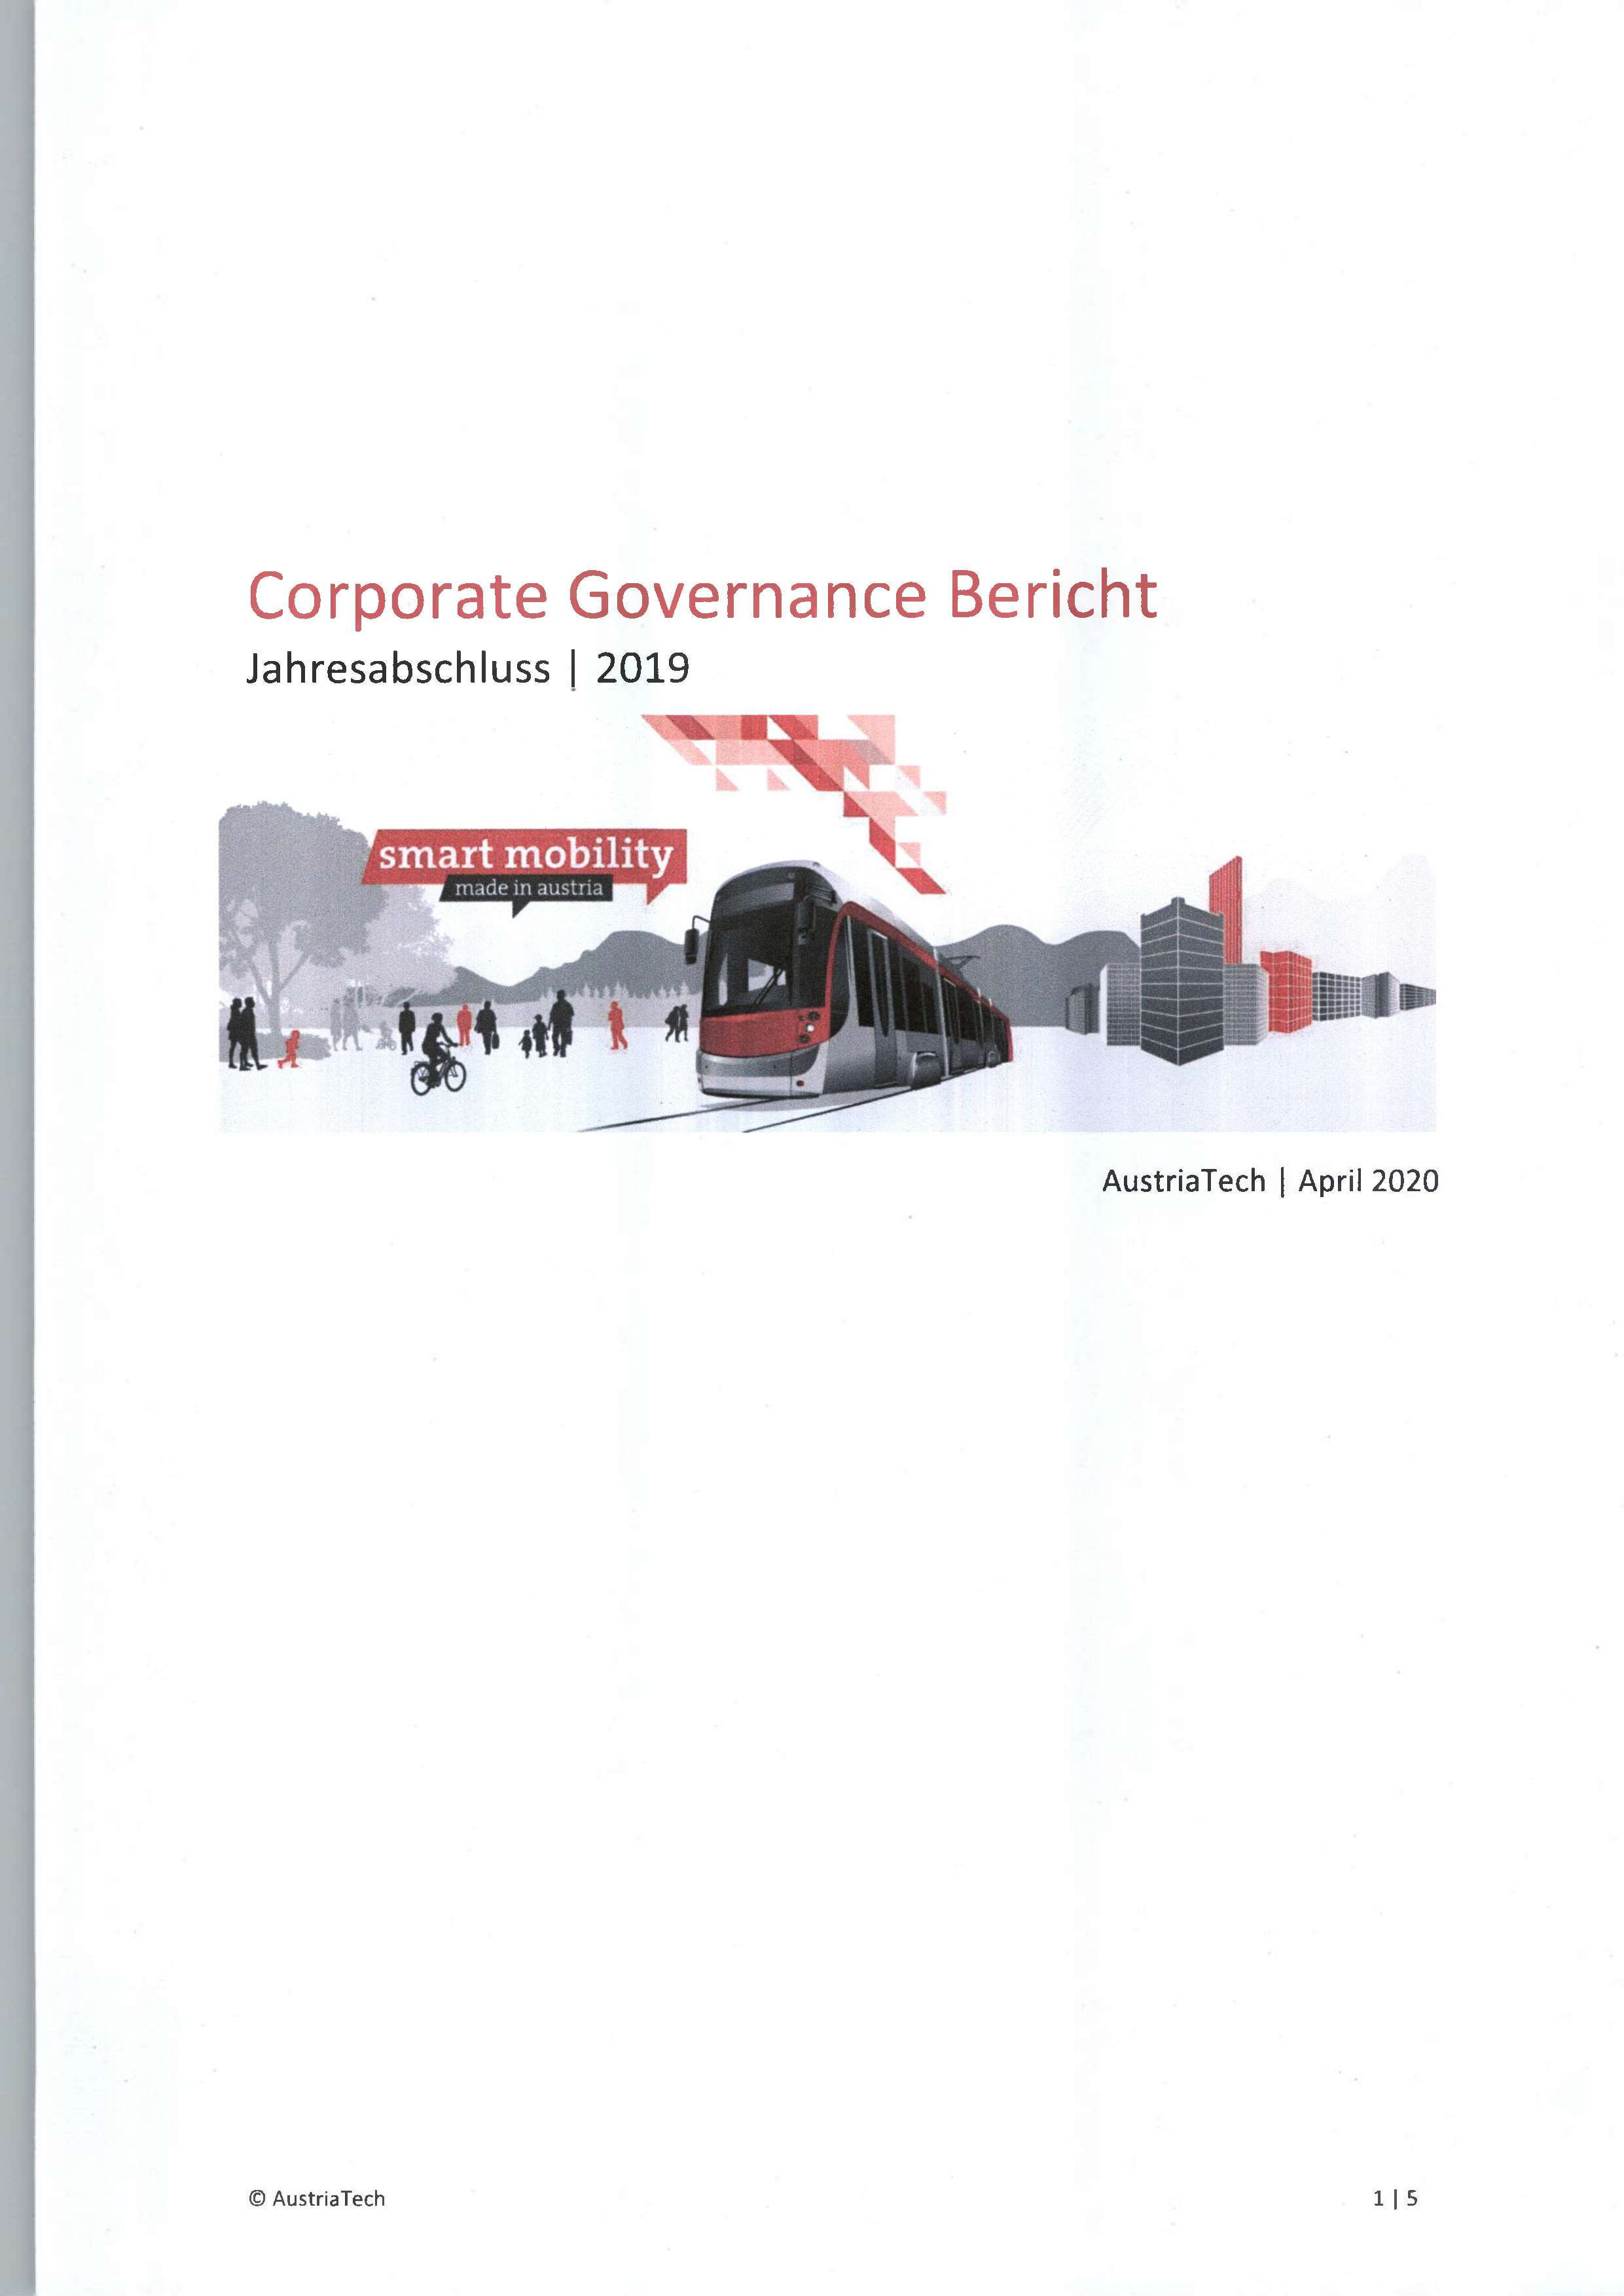 2019 Deckblatt Corporate Governance Bericht